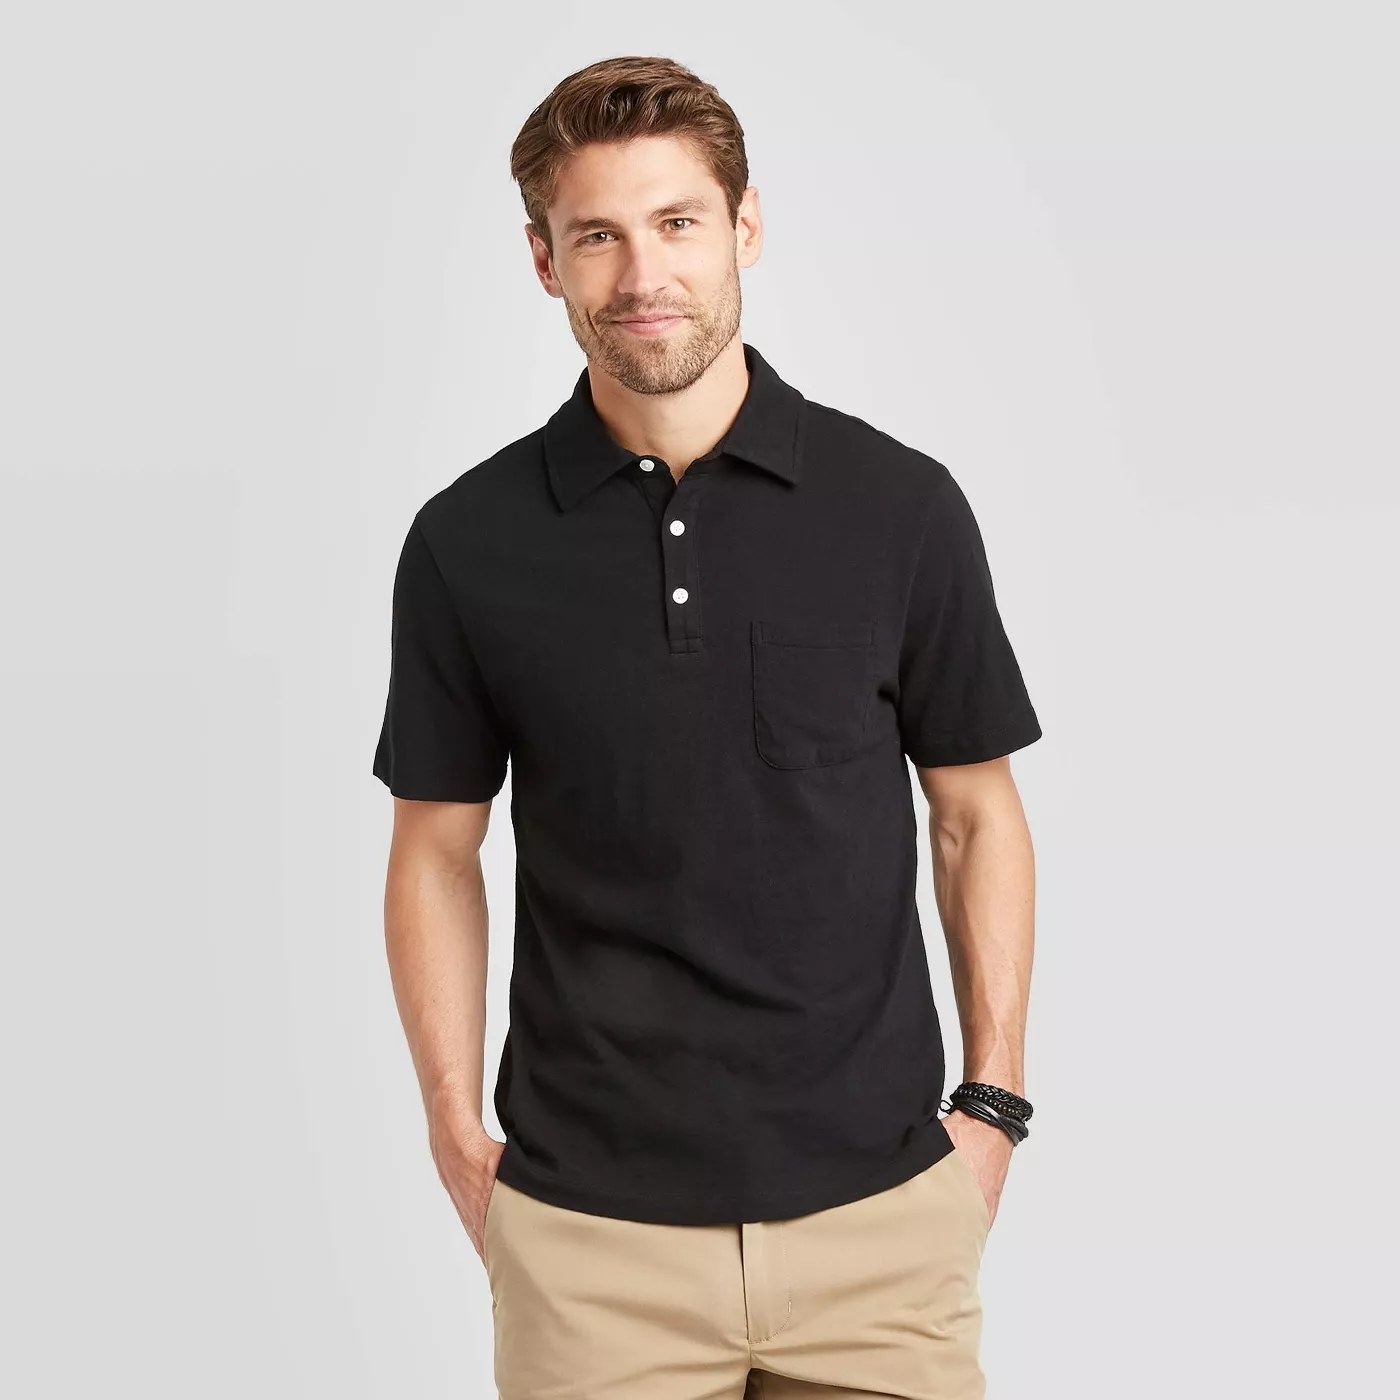 A black polo shirt